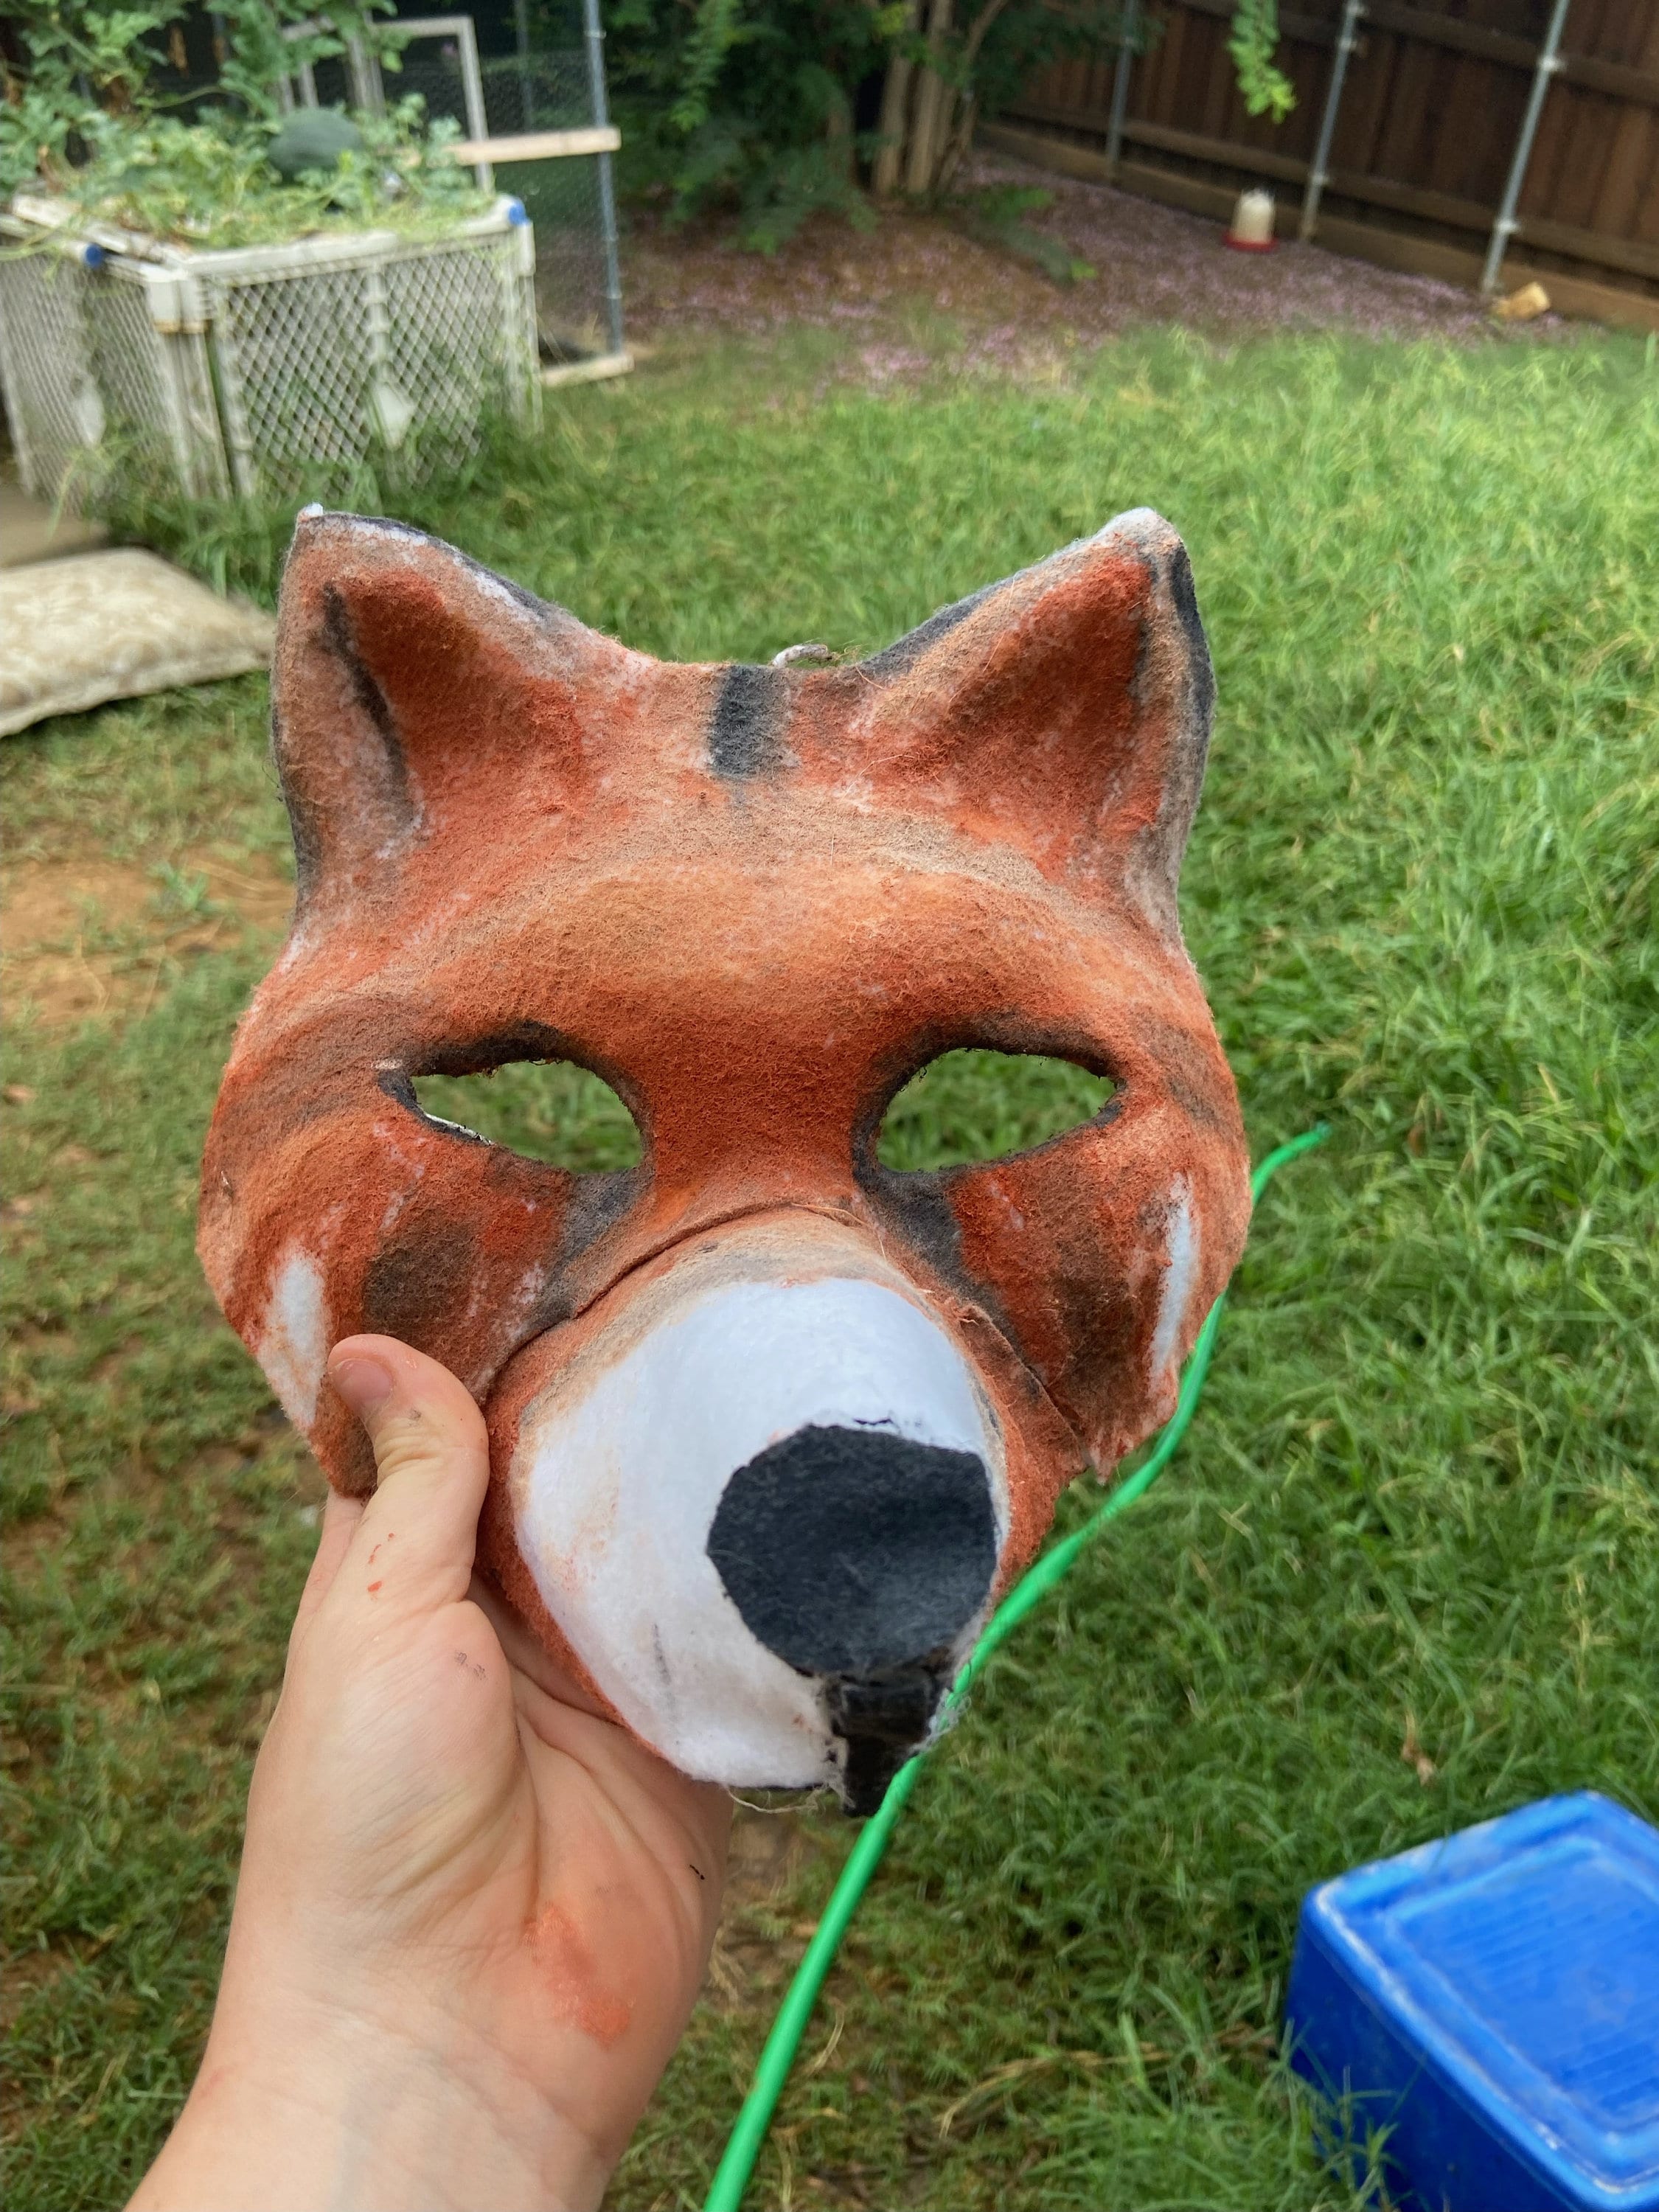 Vegan Foraged Bark White Fox Mask plus Mental Health Charity